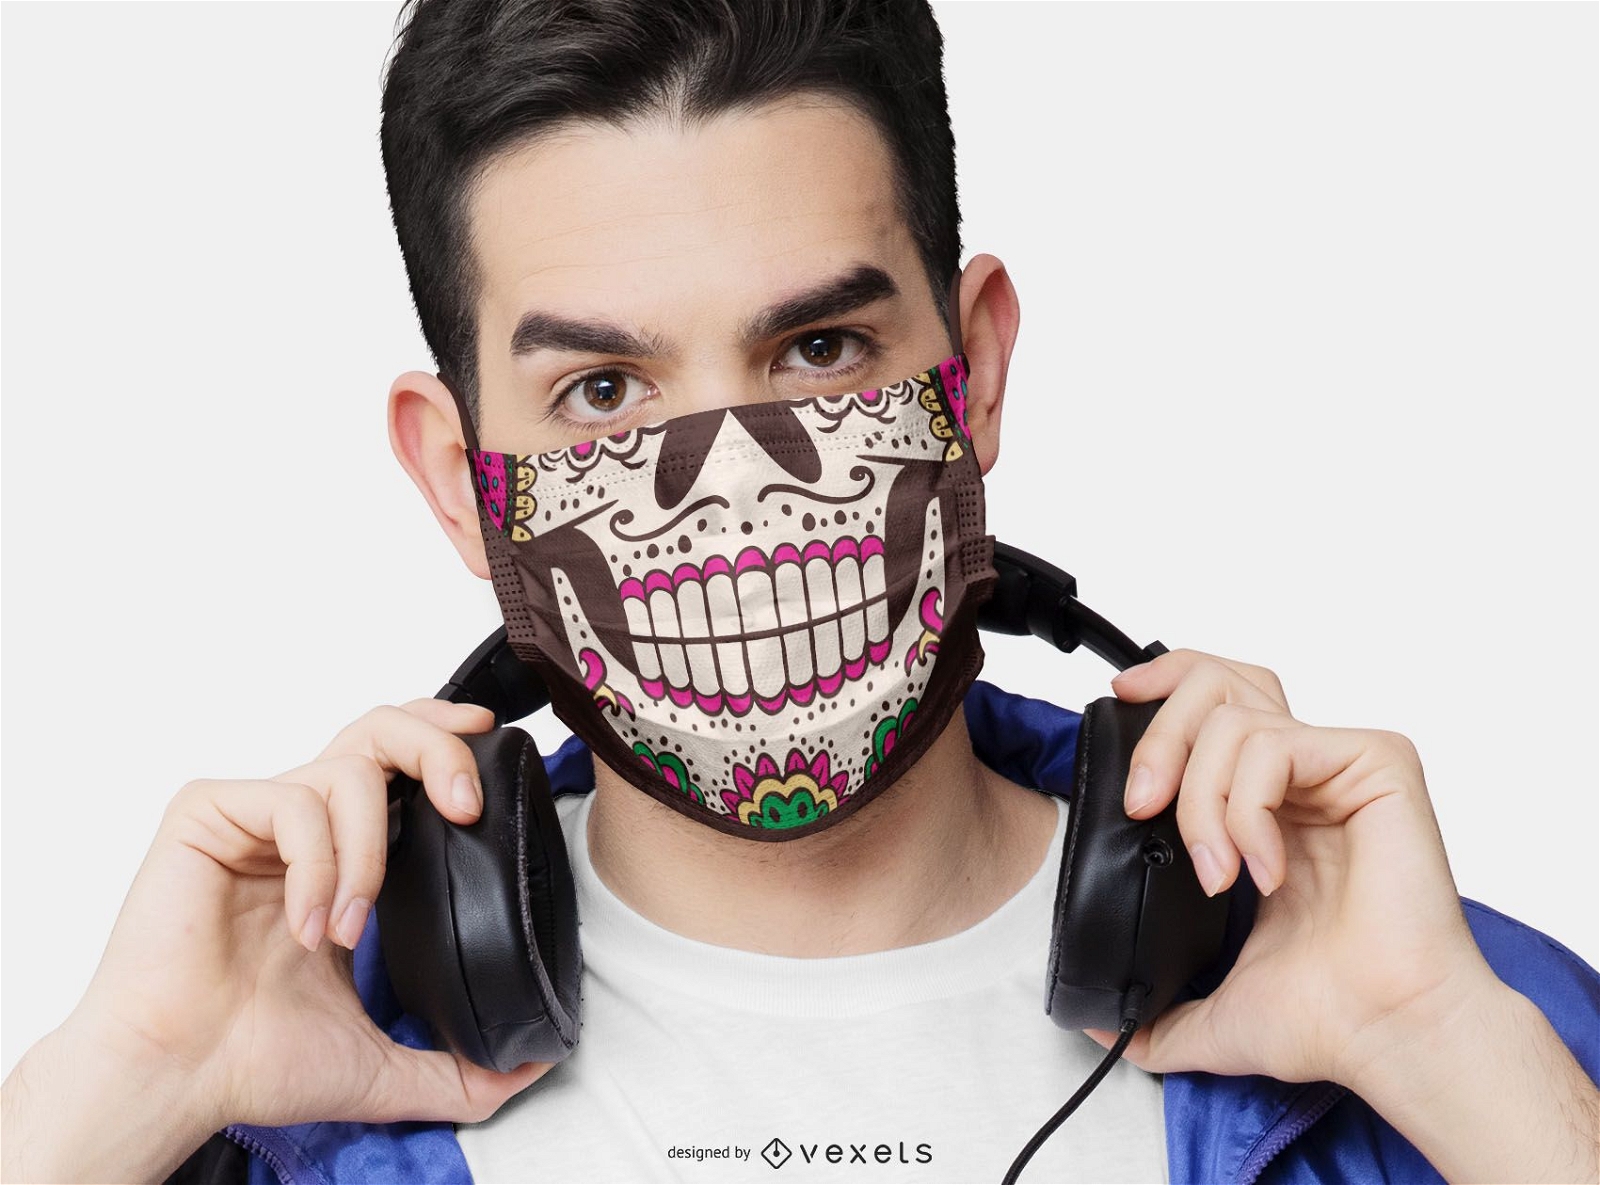 Skull mouth face mask design